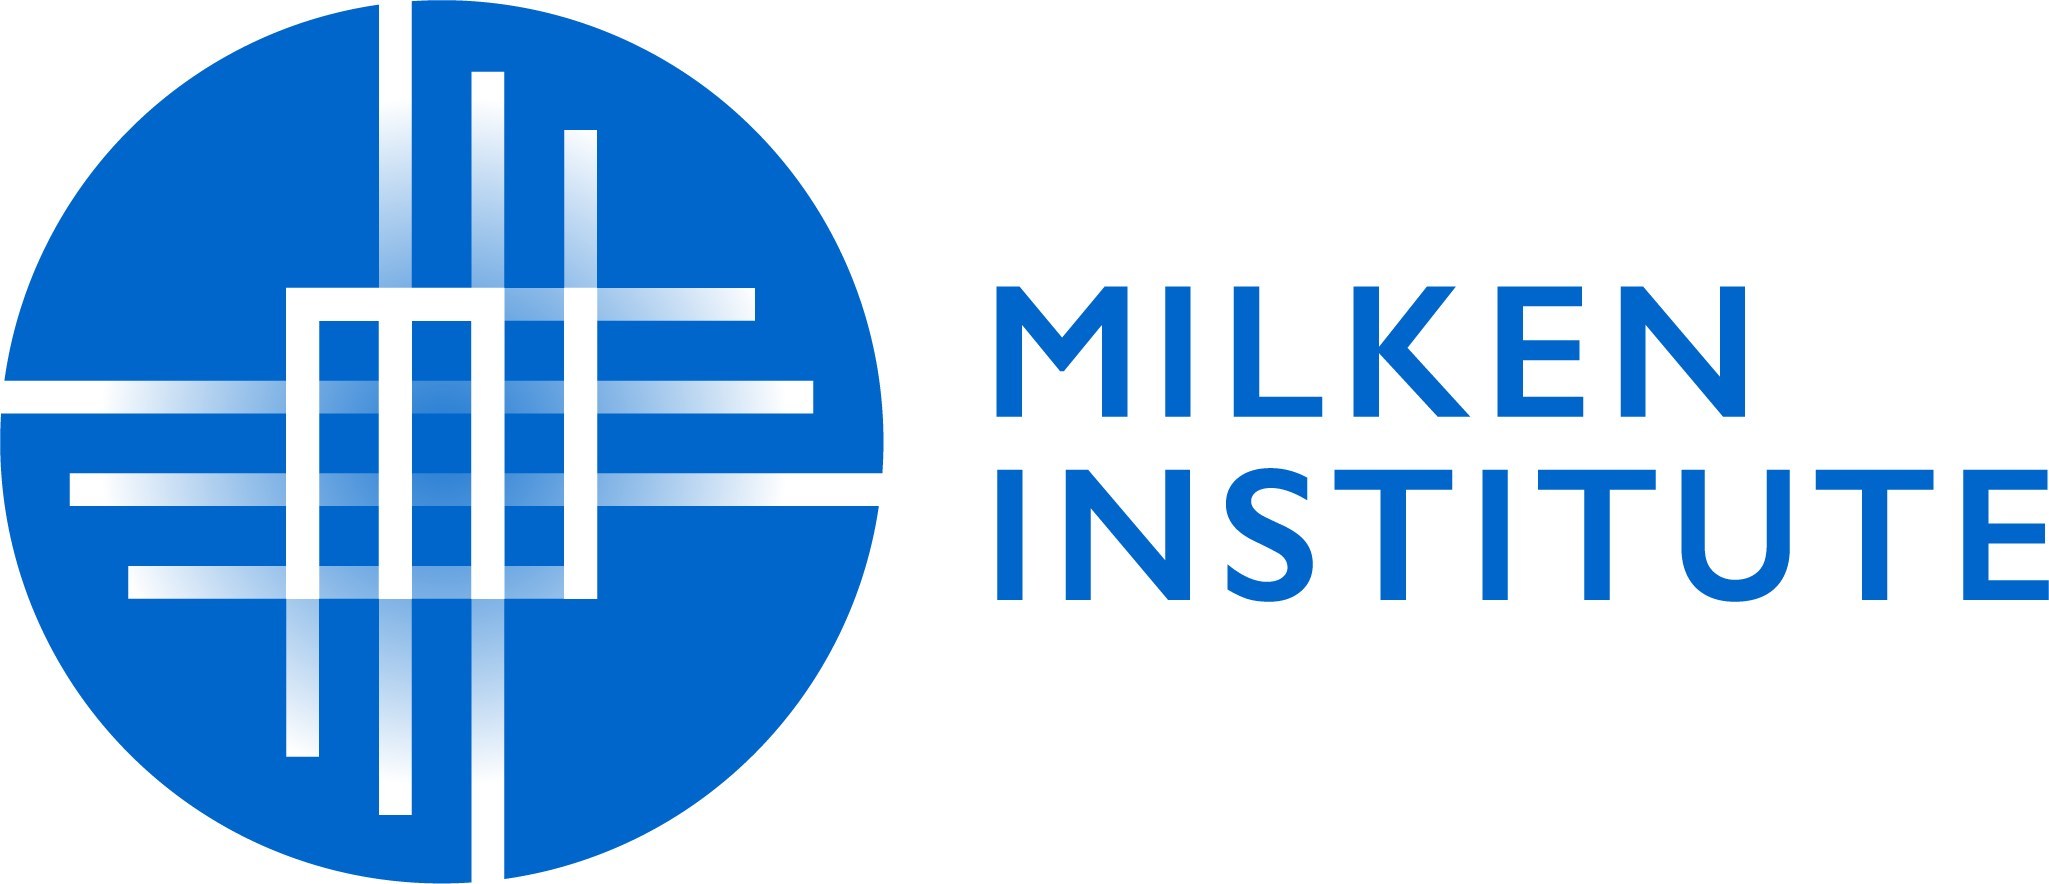 Milken Institute Asia Summit Kicks Off with Virtual, in Person